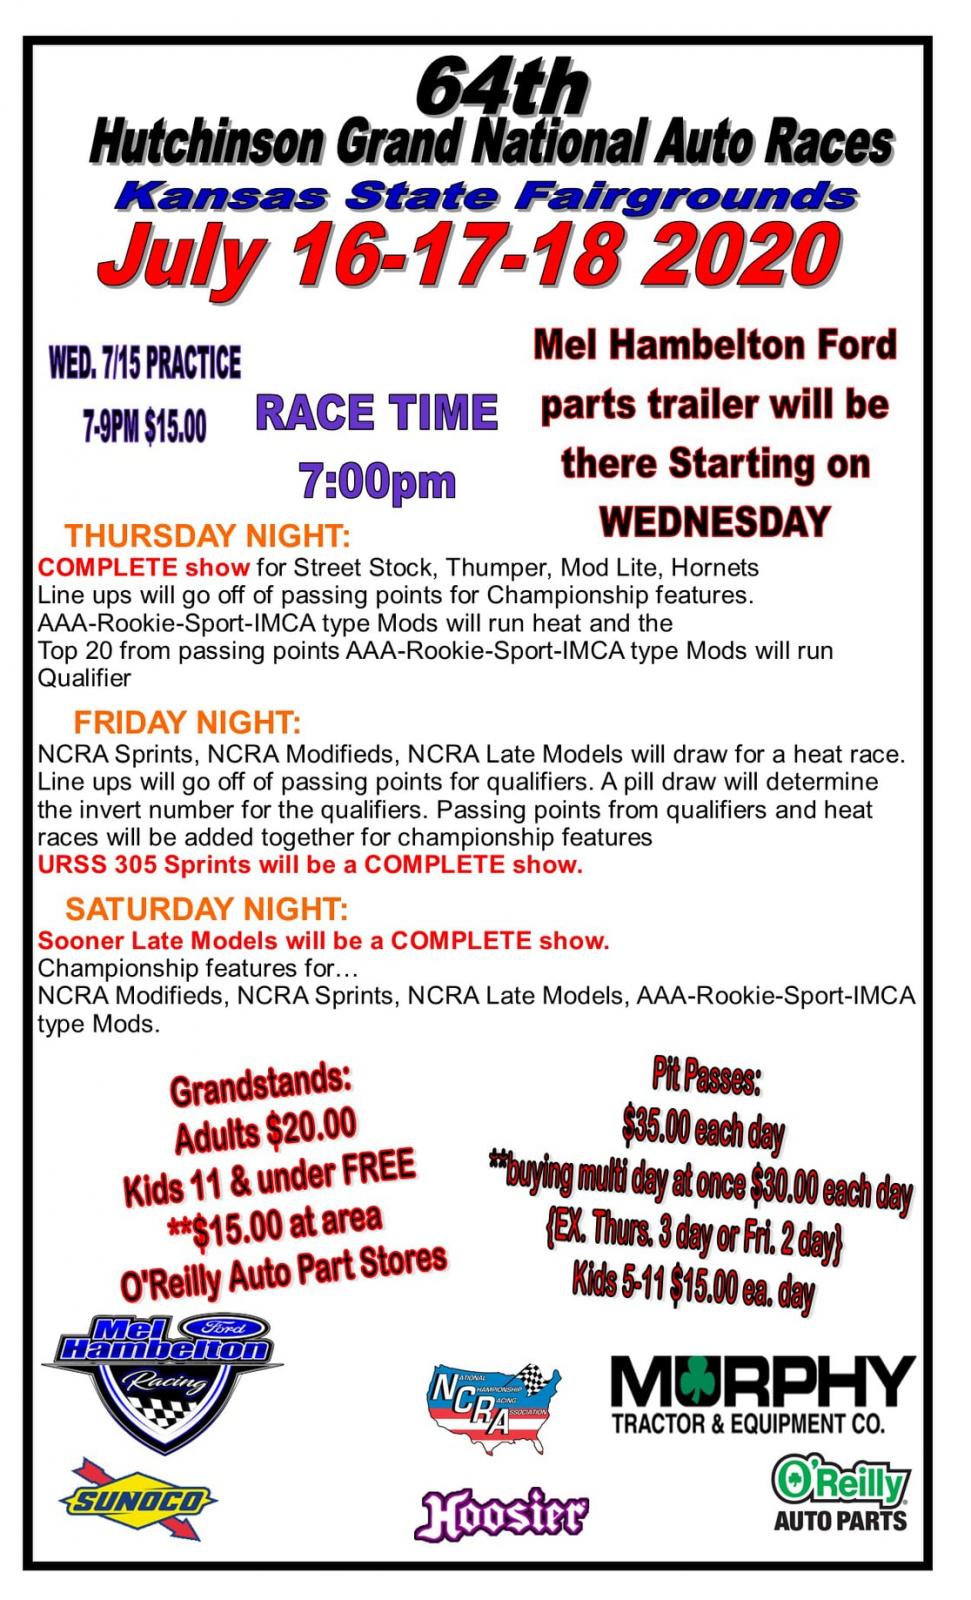 64th Annual Hutchinson Grand National Auto Races